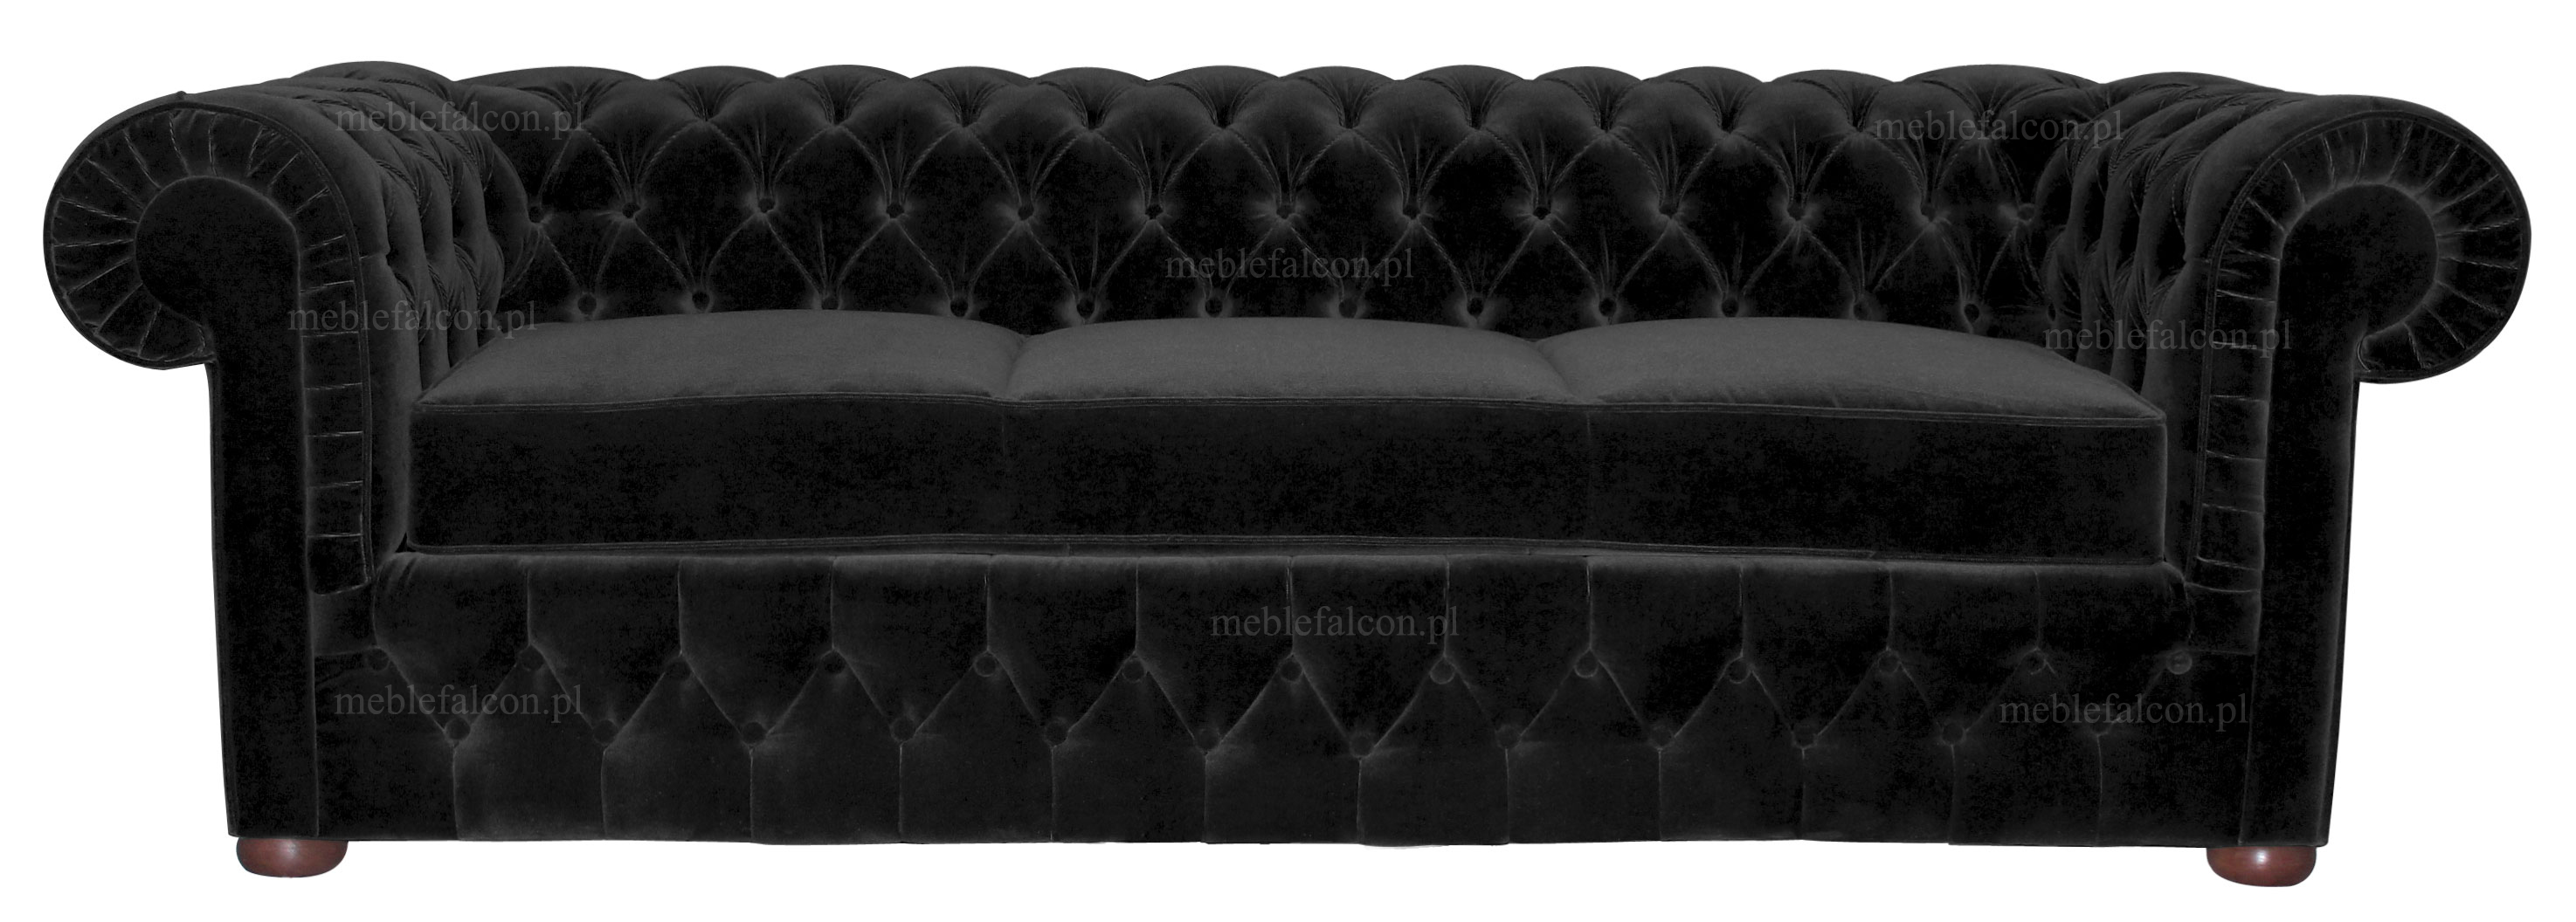 pikowana sofa chesterfield czarna producent mebli